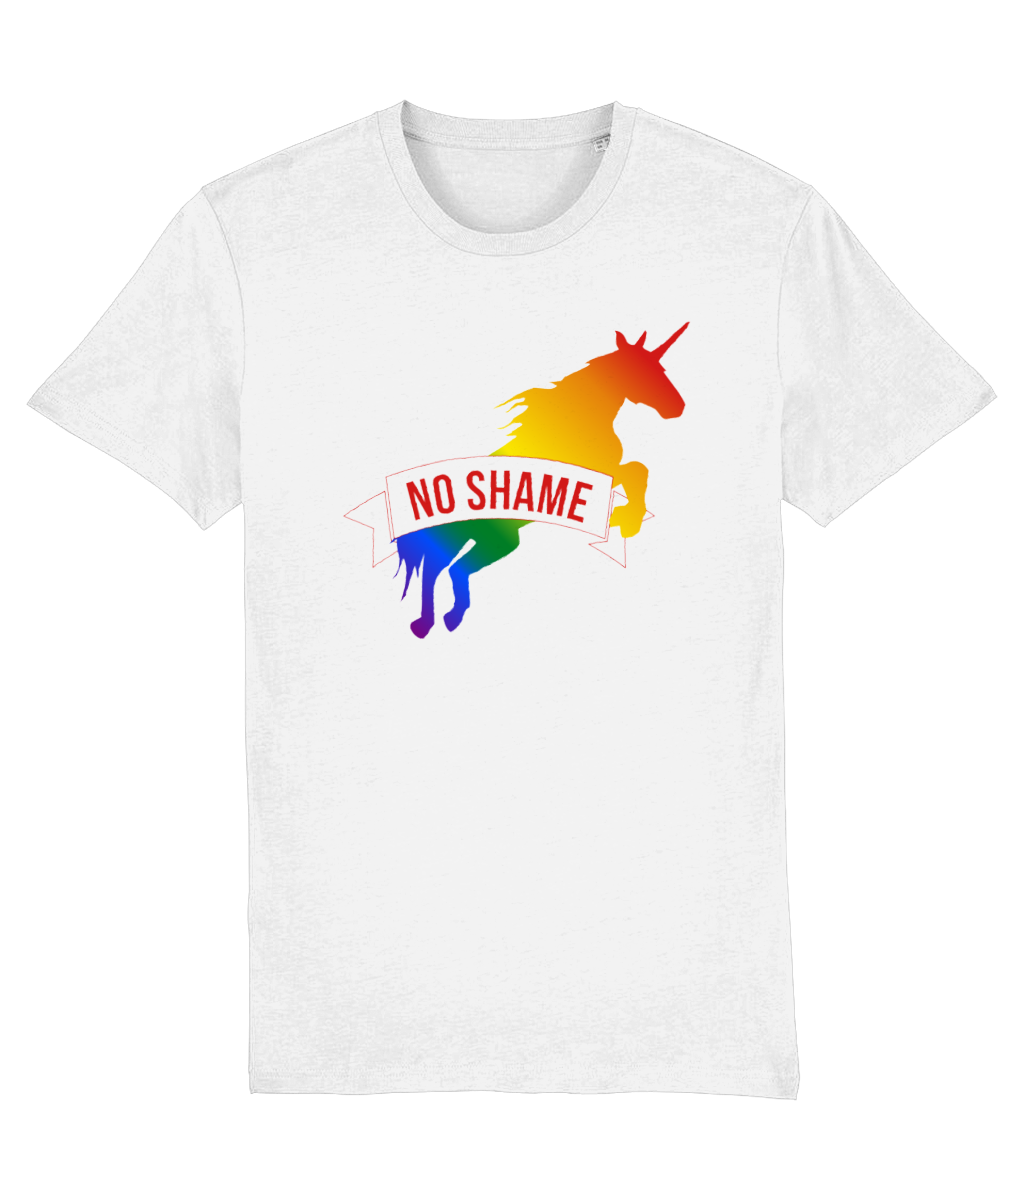 No shame Rainbow Unicorn Organic Cotton T-Shirt